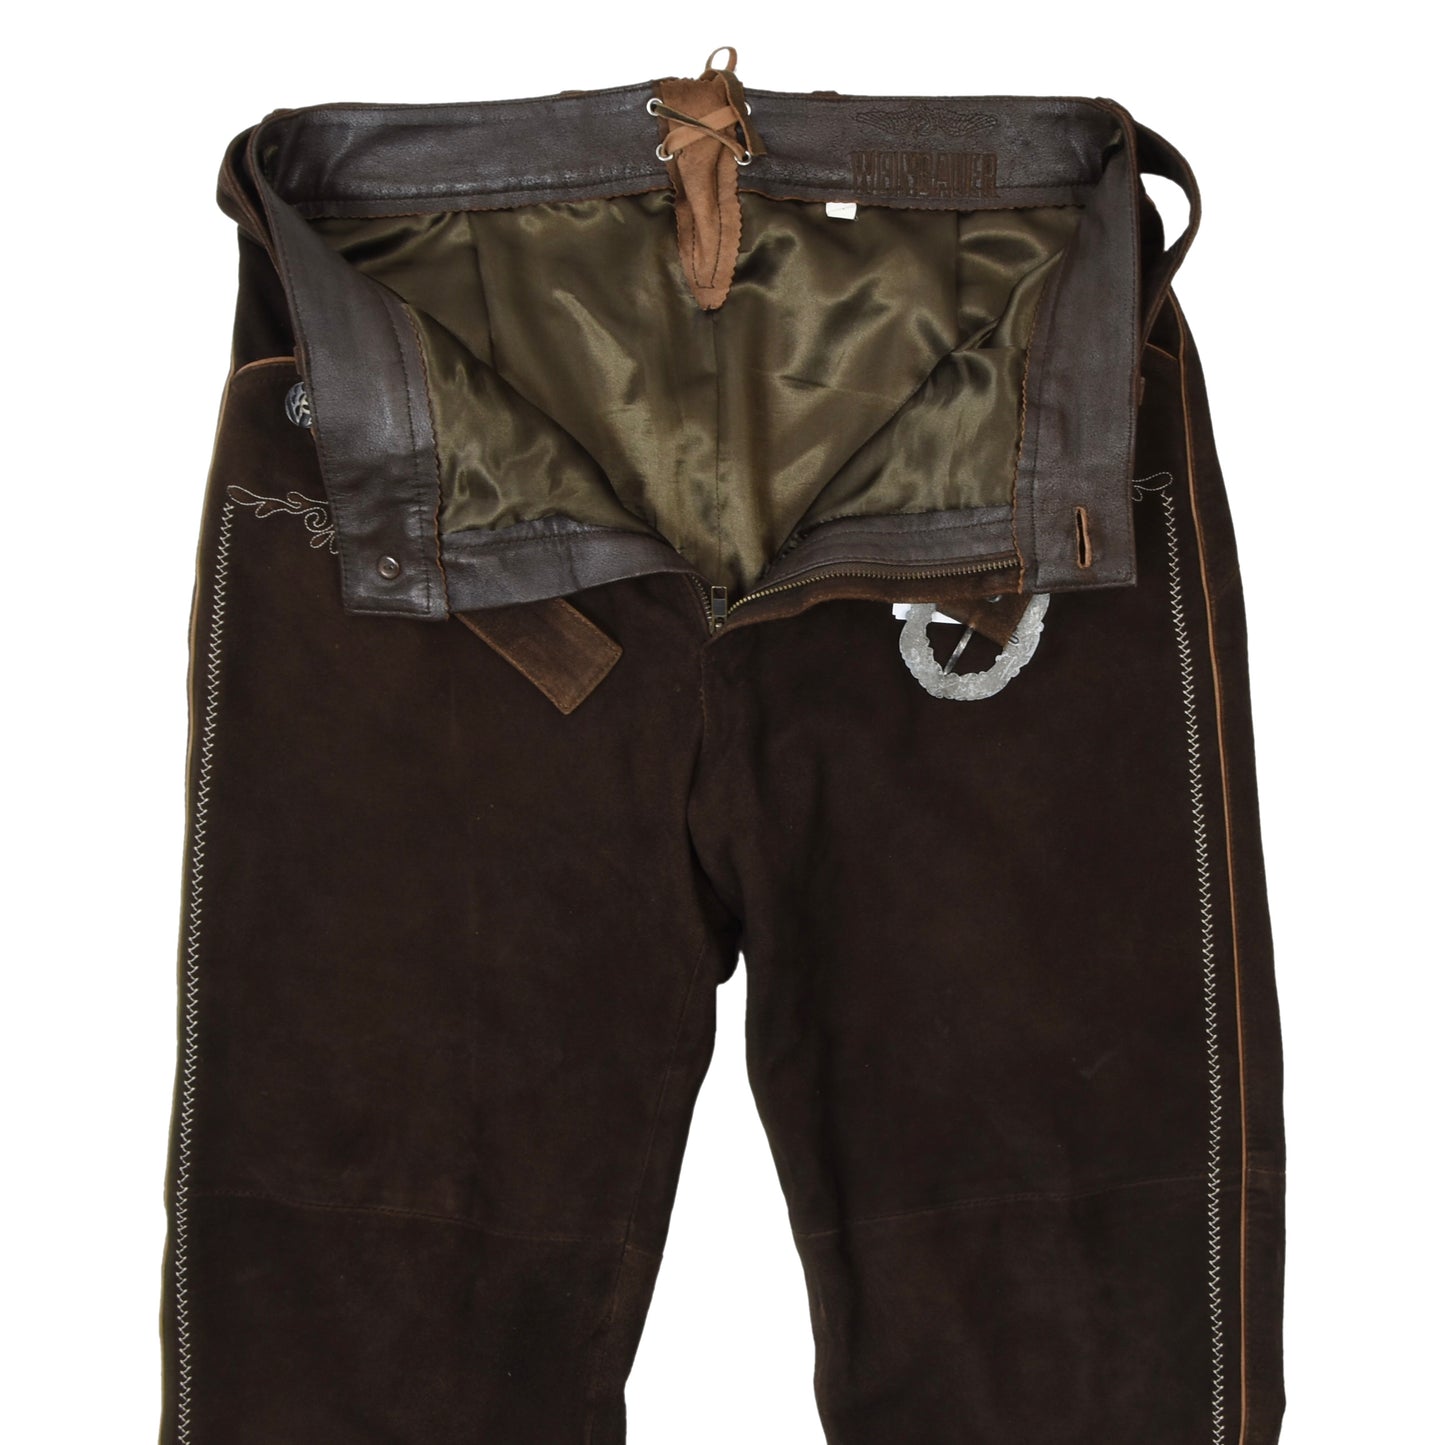 Weinbauer Suede Lederhose/Pants Size 24 - Brown